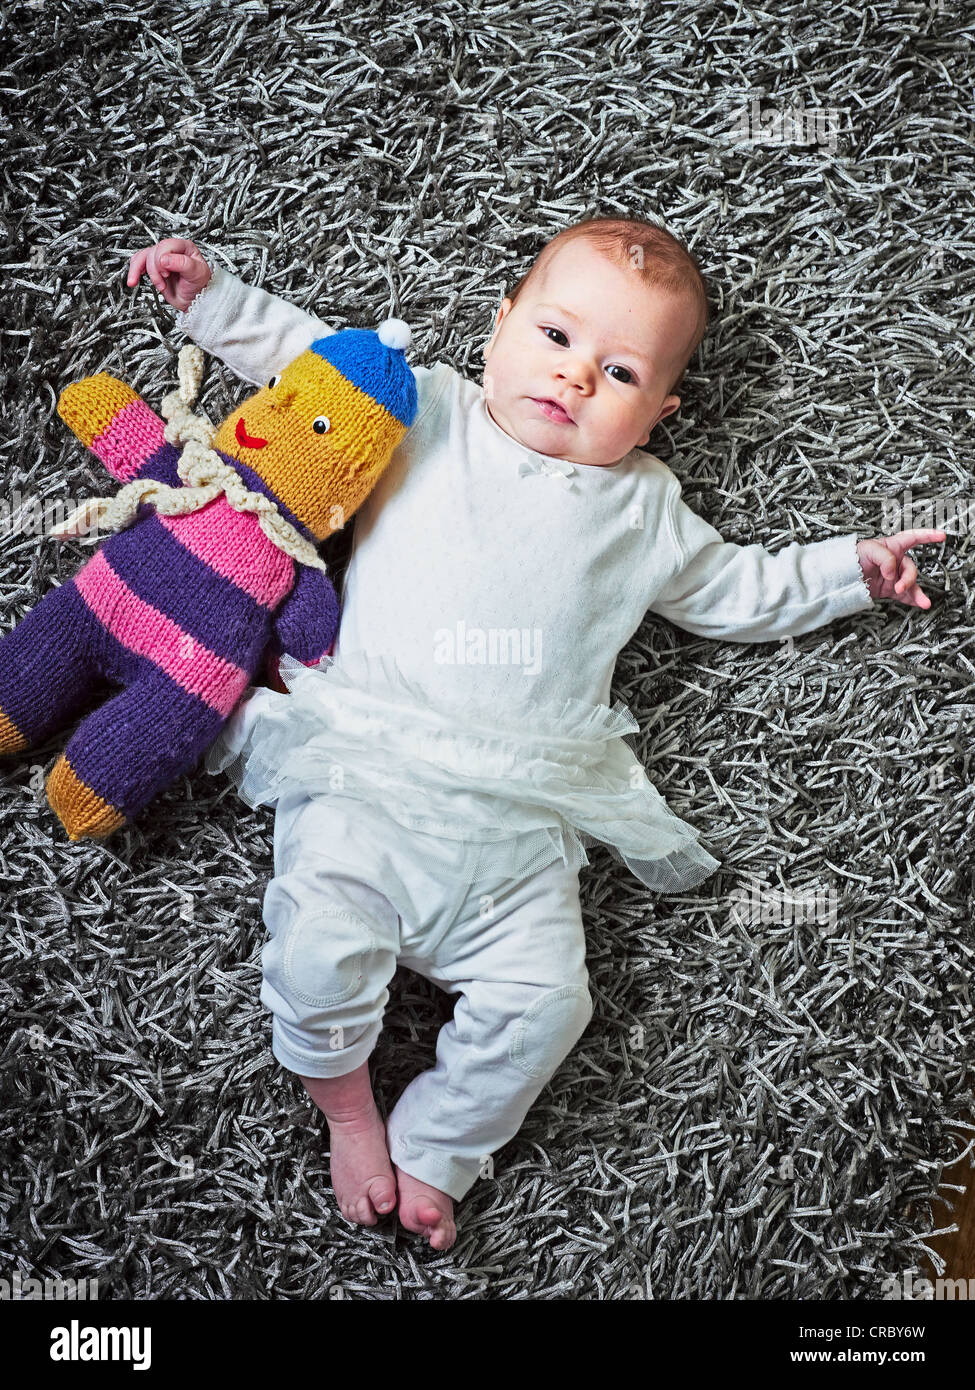 Baby laying on rug with stuffed animal Stock Photo